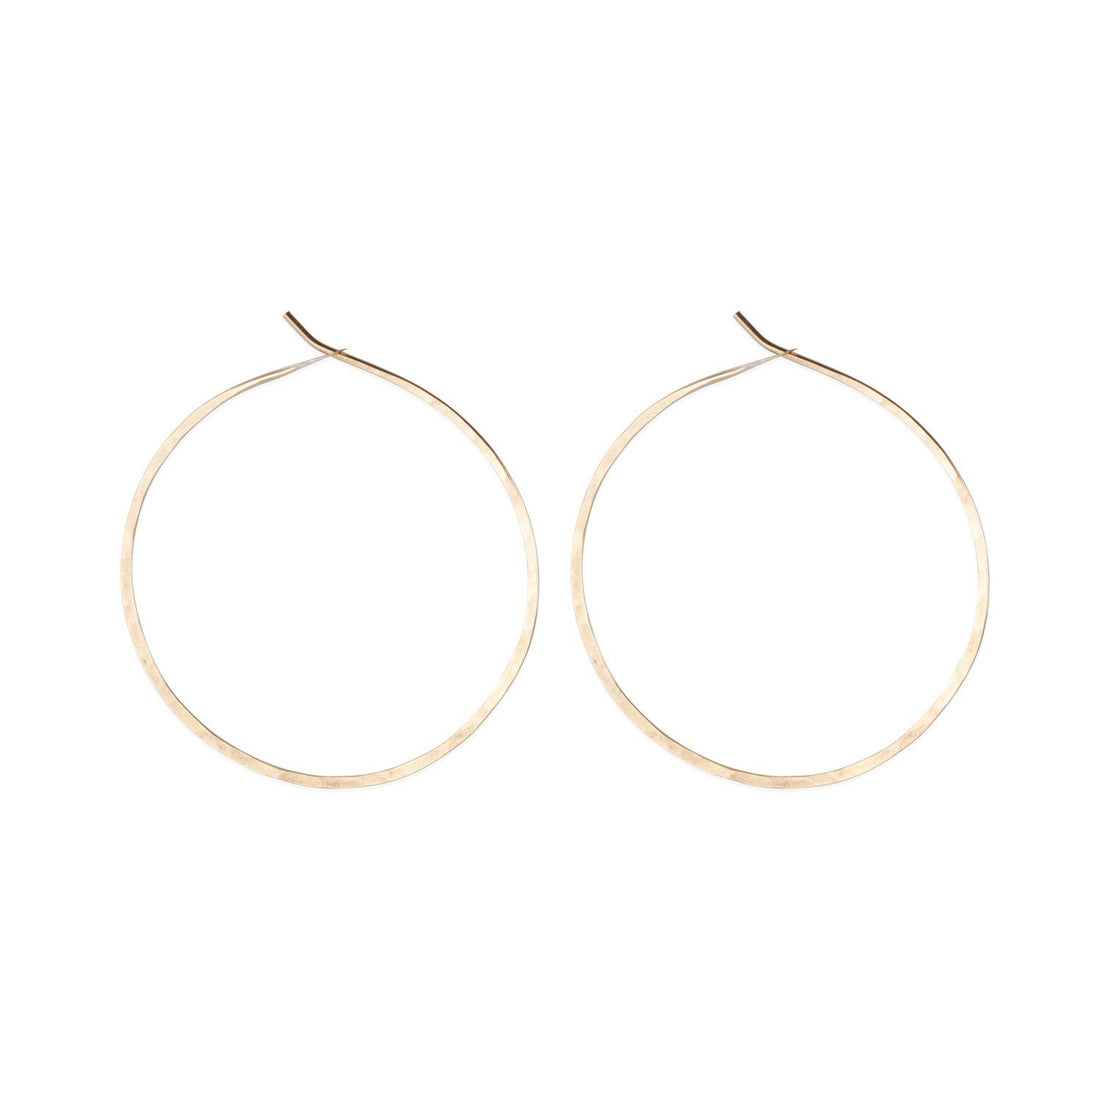 Kasia Earrings, Gold Fill 50mm - Sayulita Sol Jewelry